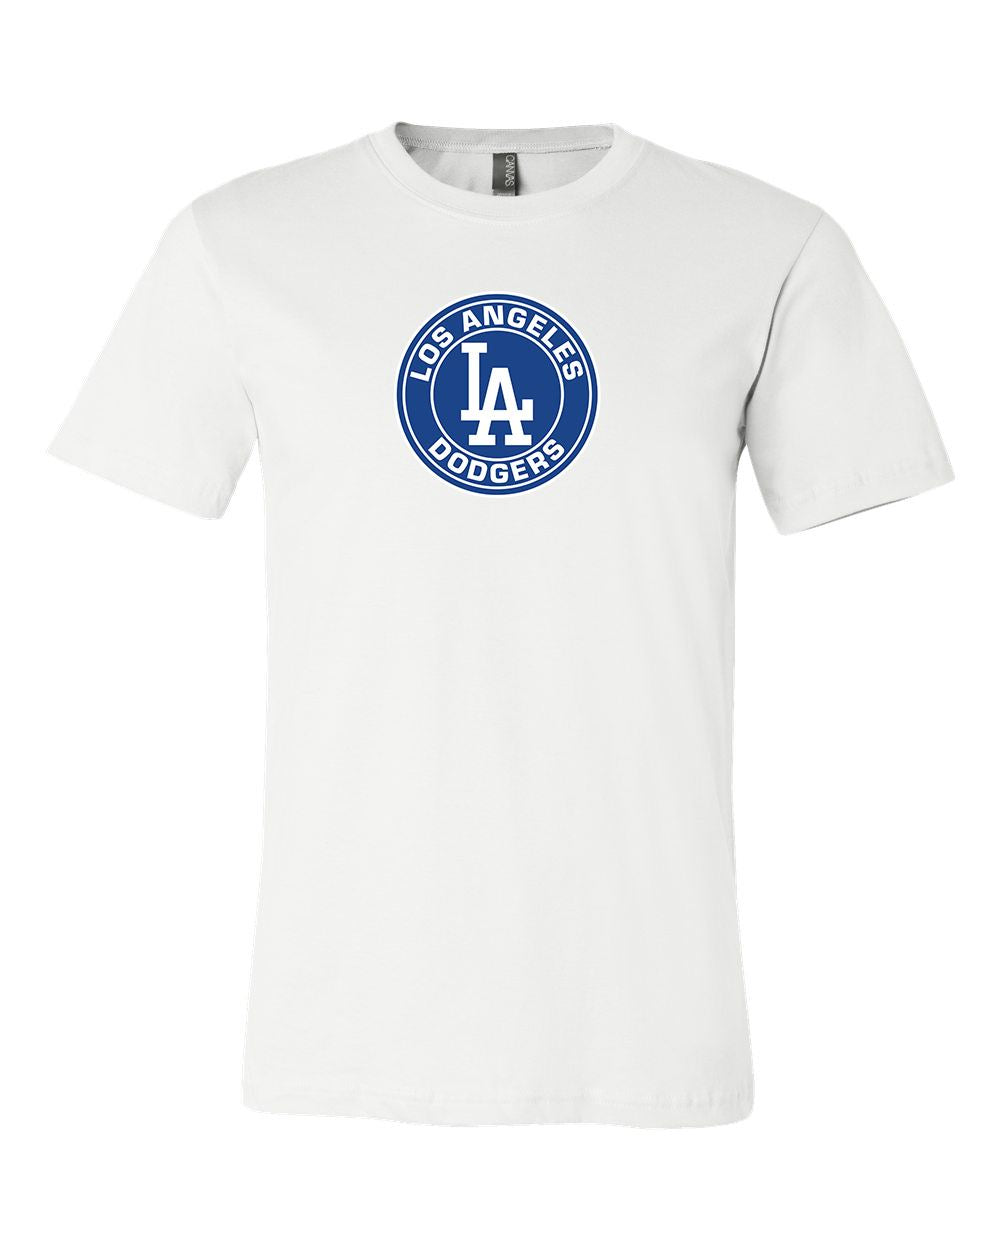 White Los Angeles Photo Logo T-Shirt